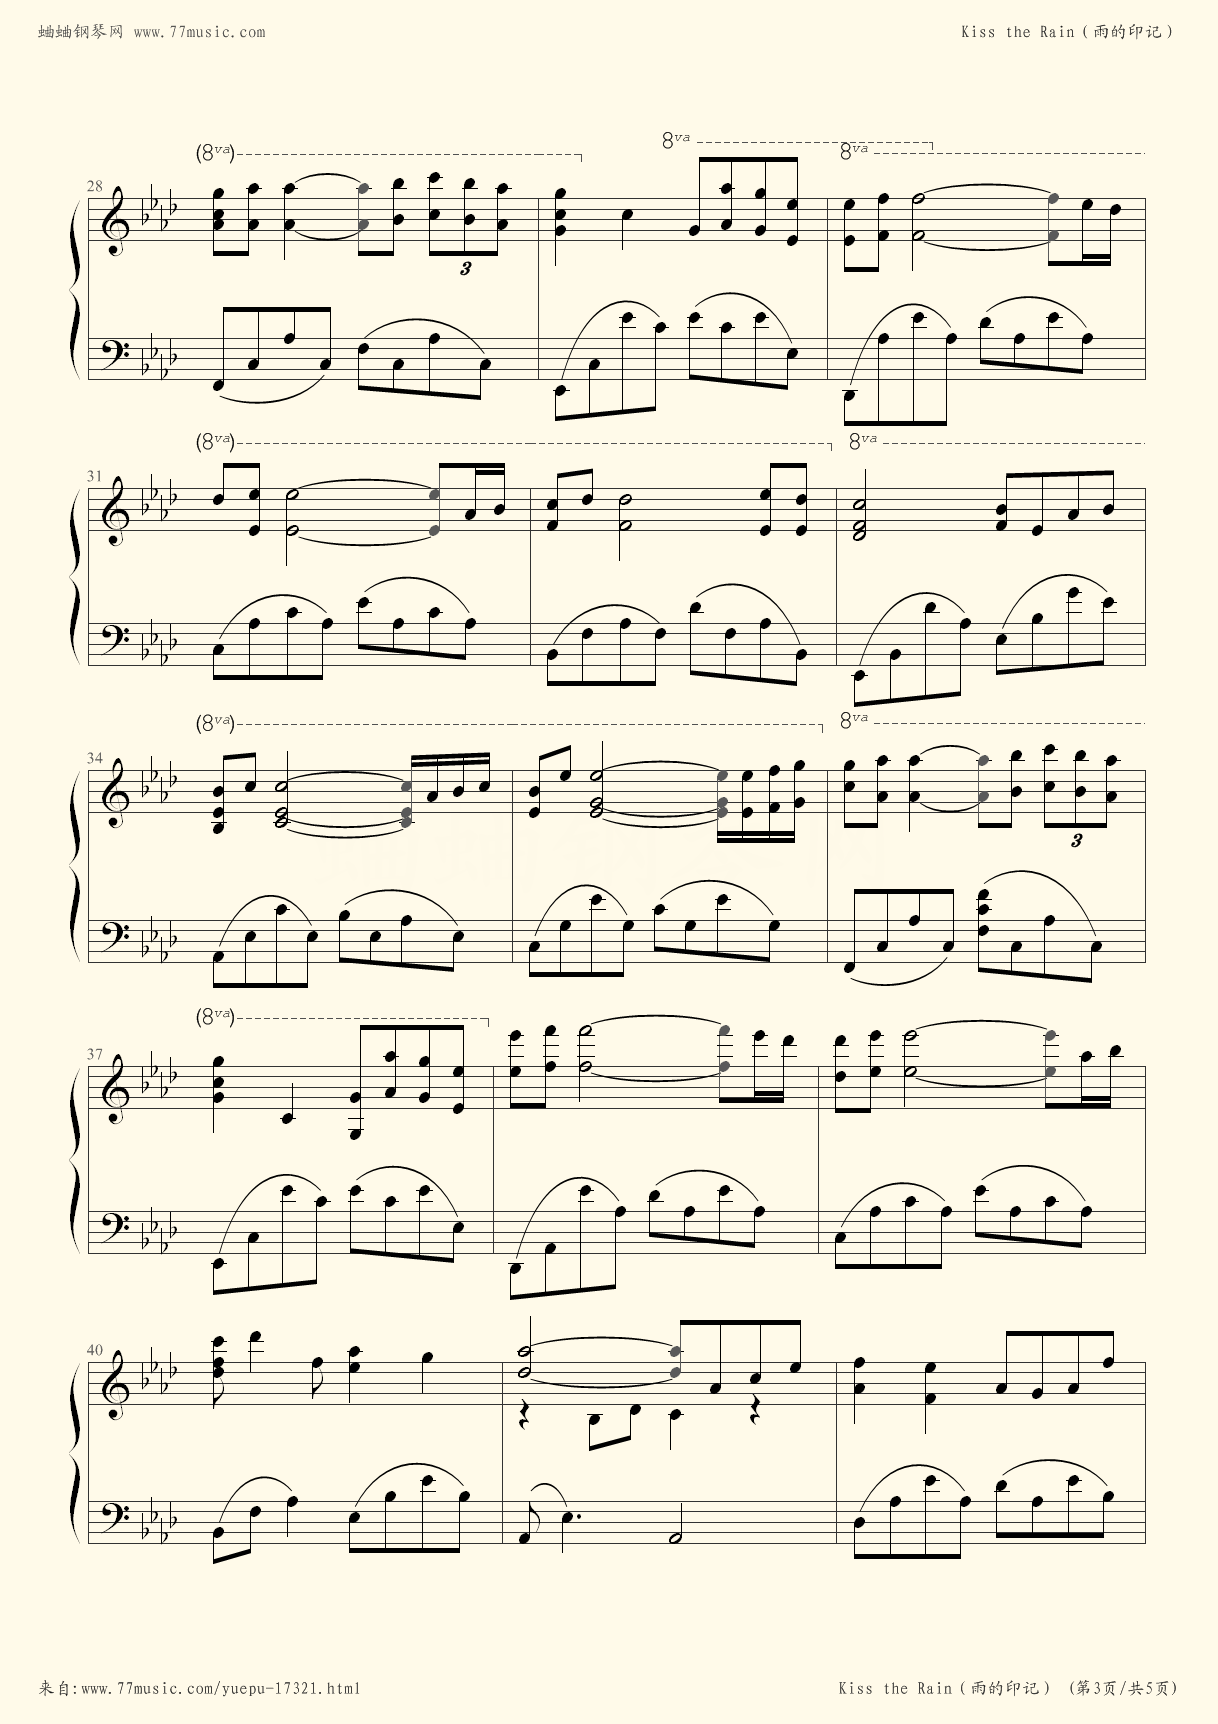 Kiss the Rain - Yiruma - Flash Version2 Piano Sheet Music Free